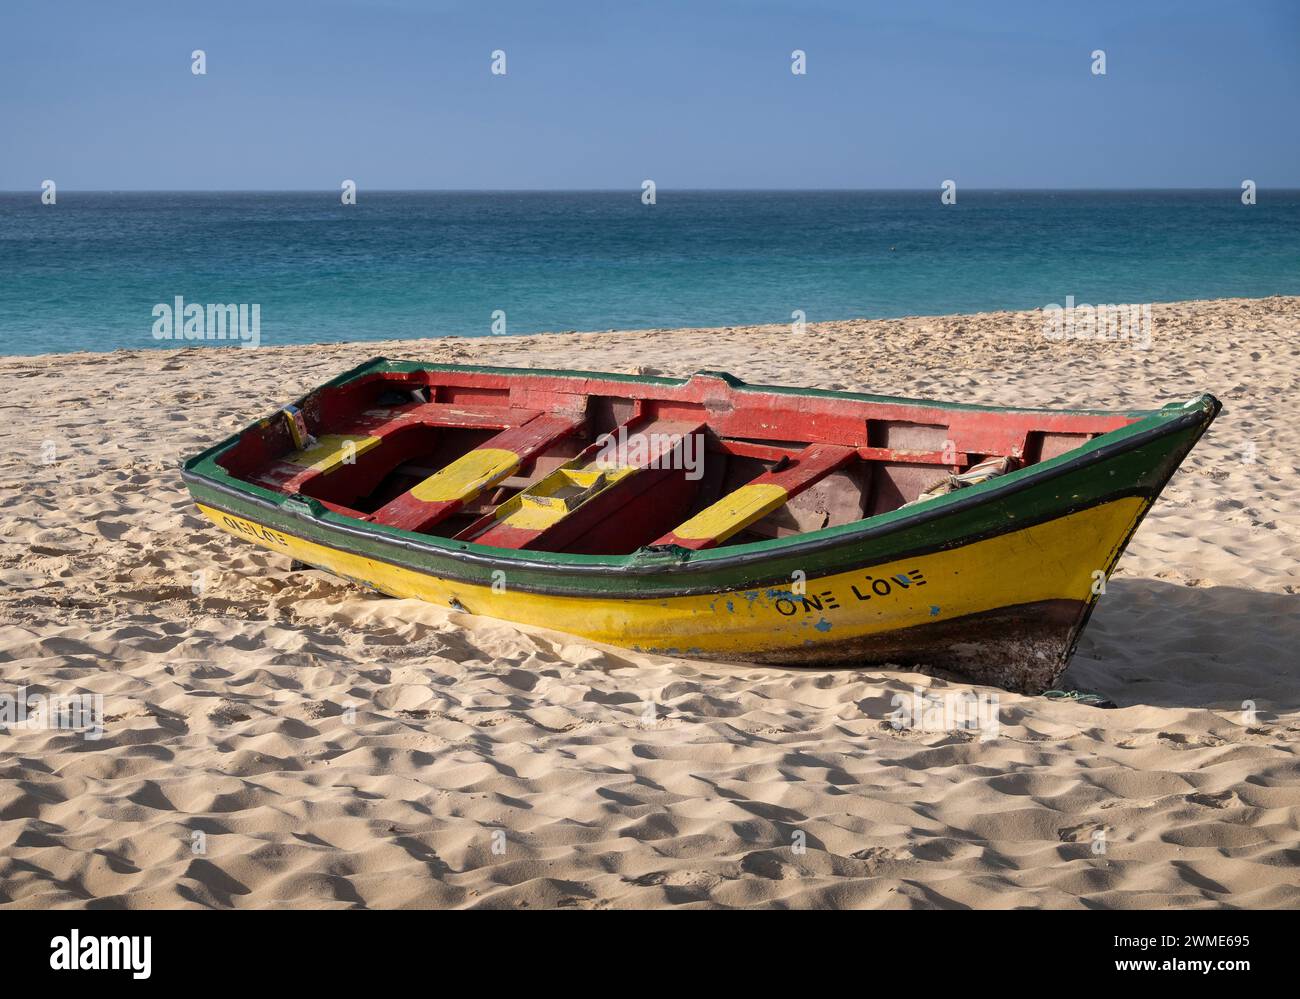 Colourful Fishing Boat with One Love painted on the Hull, Praia de Santa Maria Beach, Santa Maria, Sal, Cape Verde Islands, Africa Stock Photo